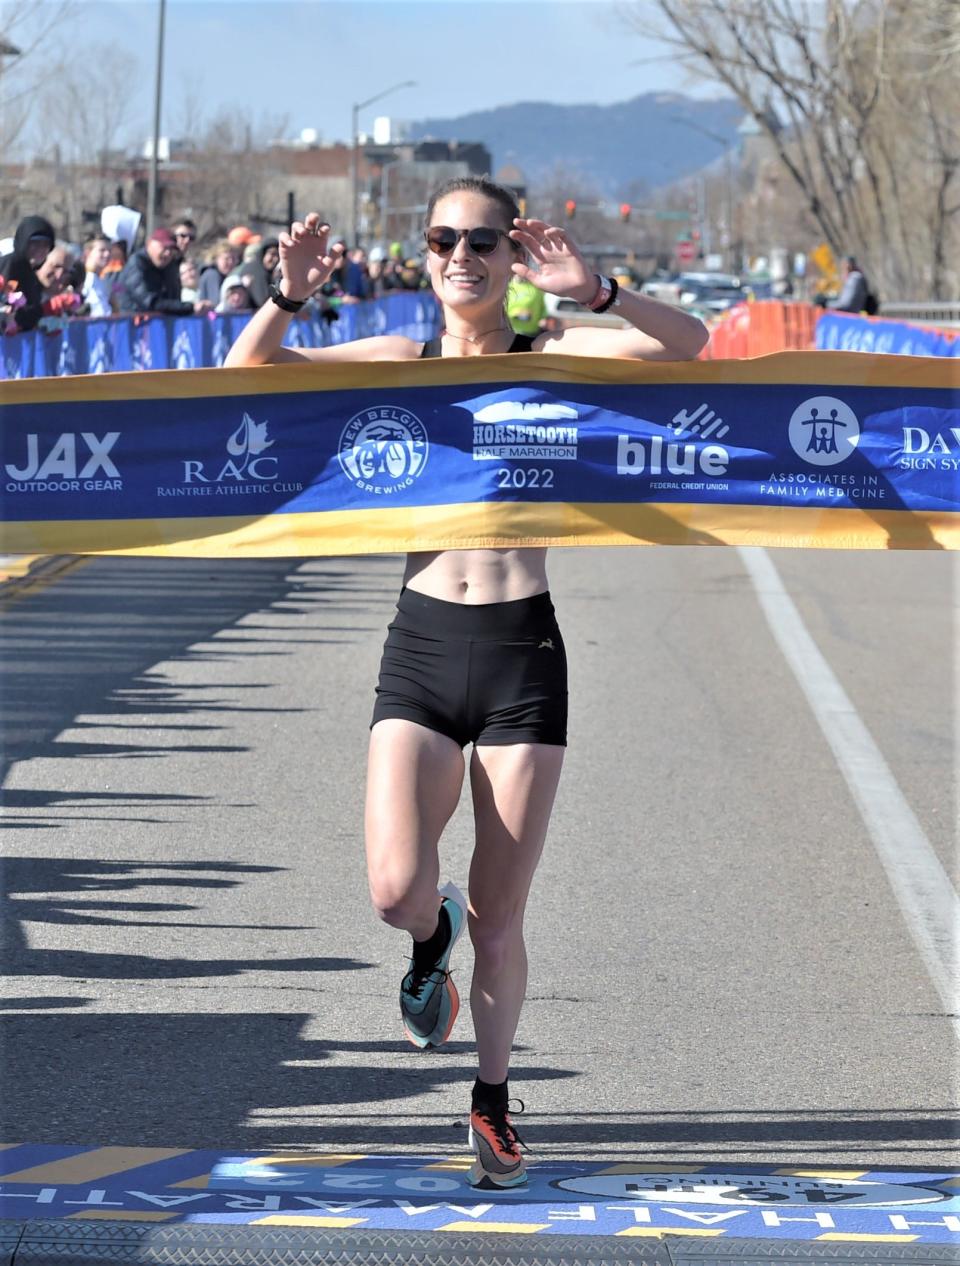 Elizabeth Lagoy of Salt Lake City, Utah, breaks the tape at the finish line as the women's winner of the Horsetooth Half Marathon on Sunday in Fort Collins.